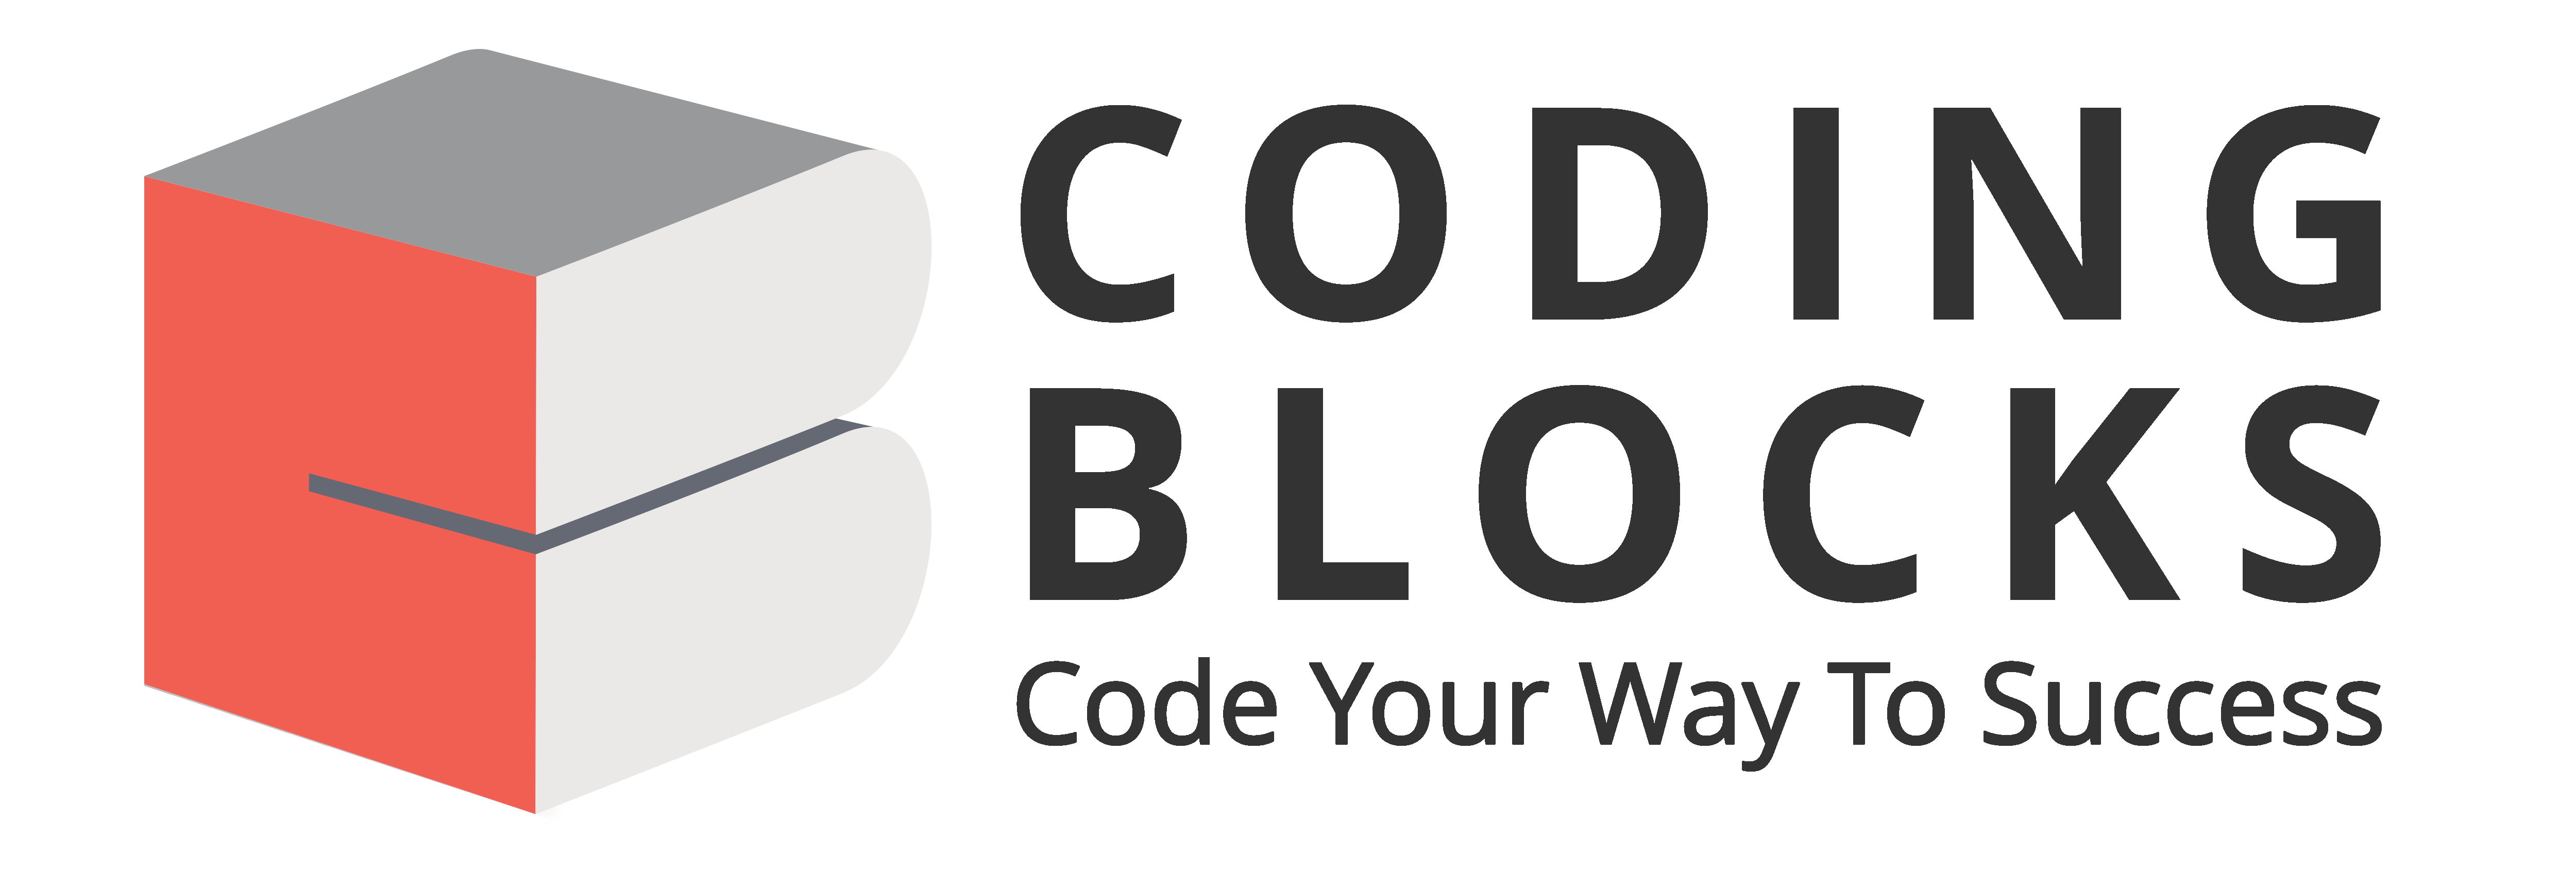 coding_blocks